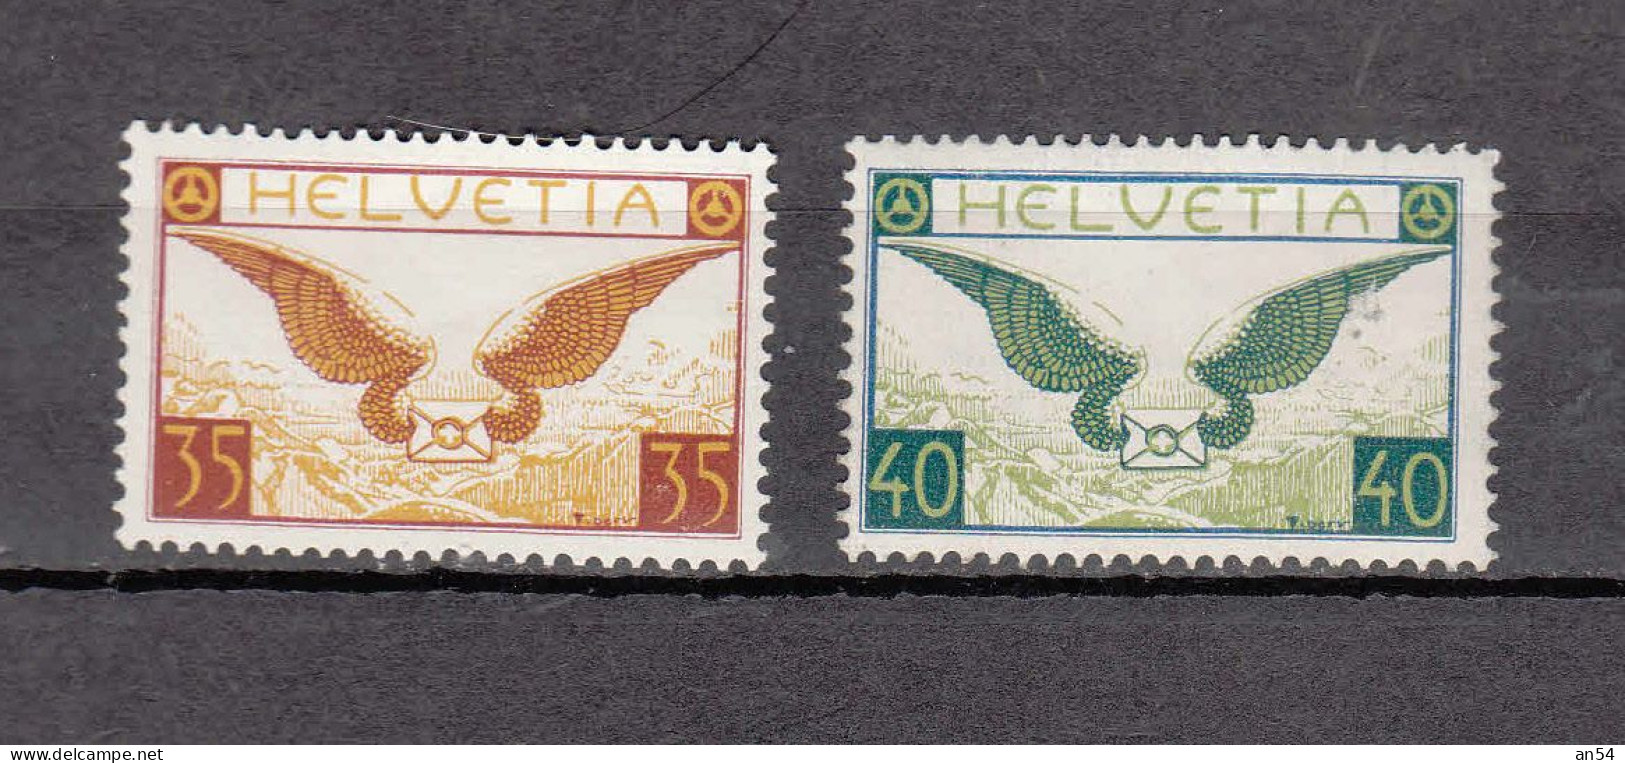 PA  1933  N°F14z - F15z  NEUFS*  COTE 75.00          CATALOGUE SBK - Unused Stamps